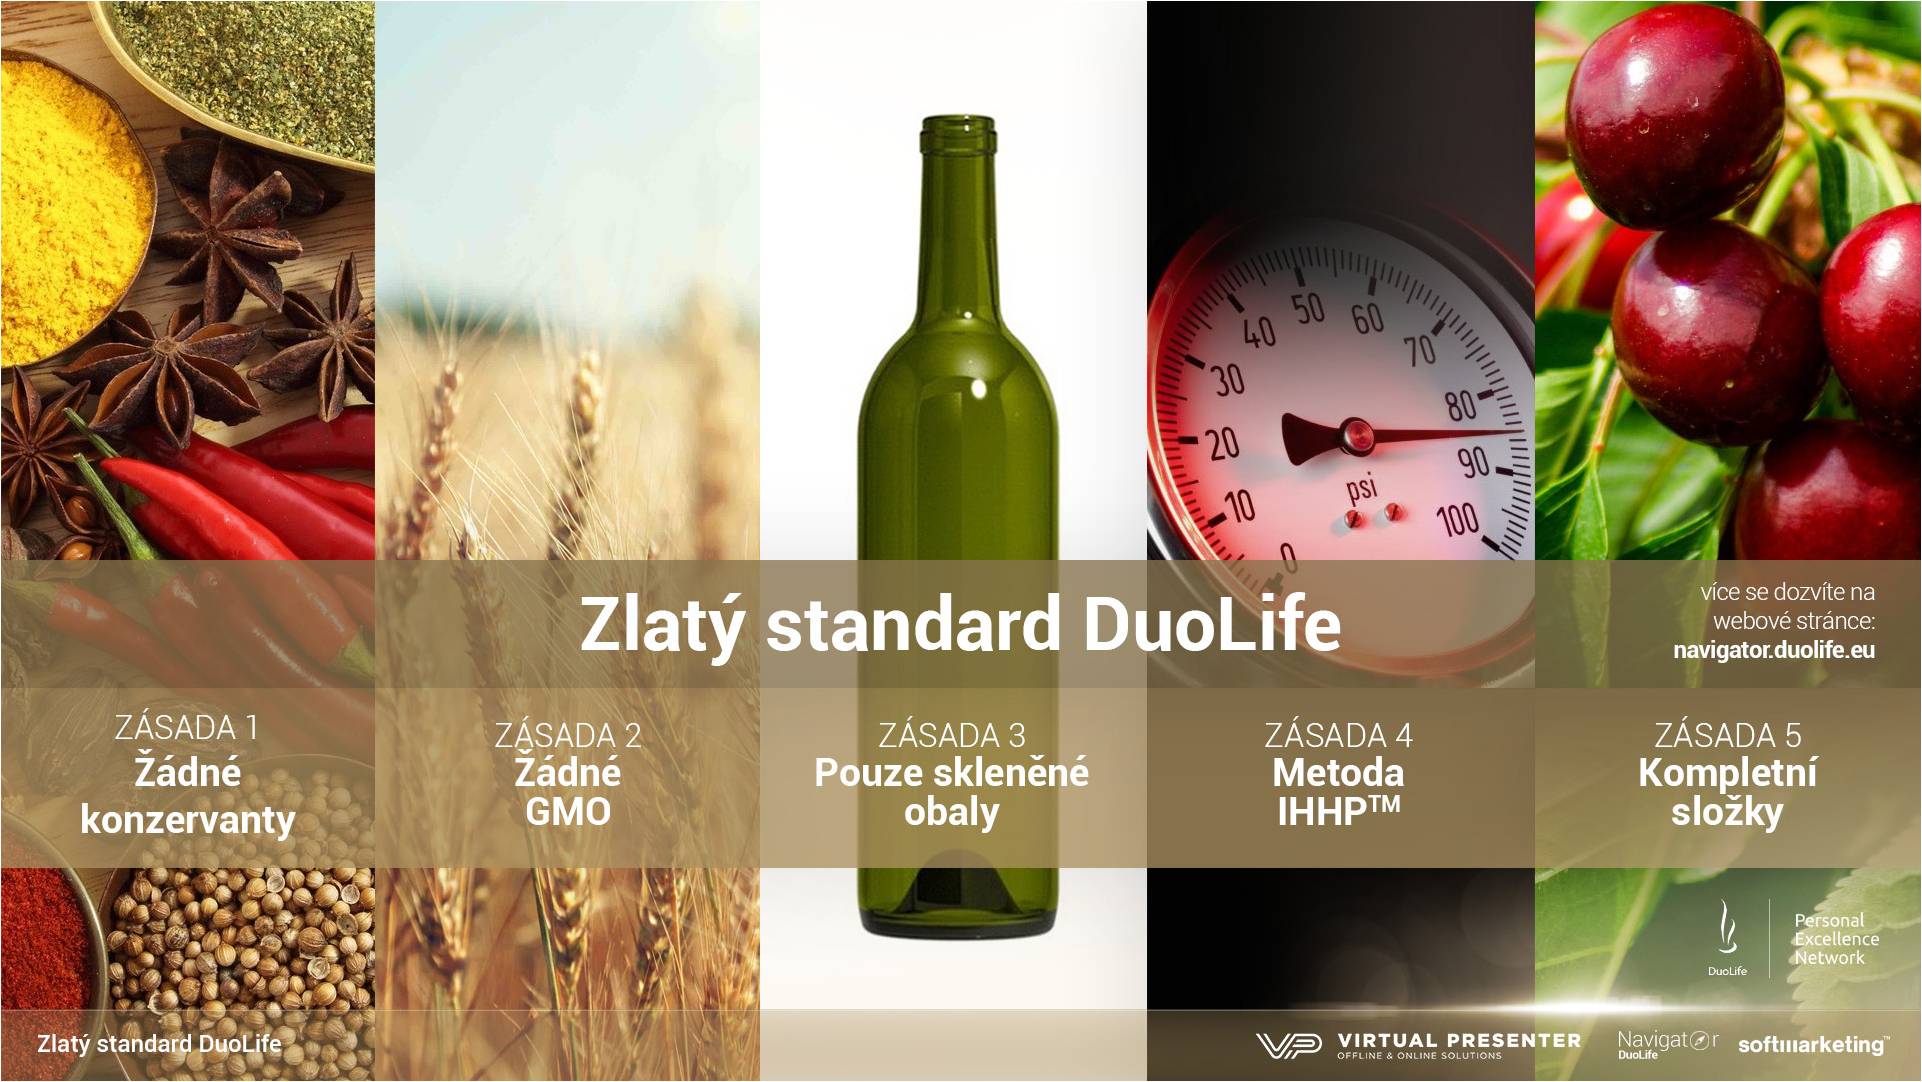 DuoLife Zlatý standard